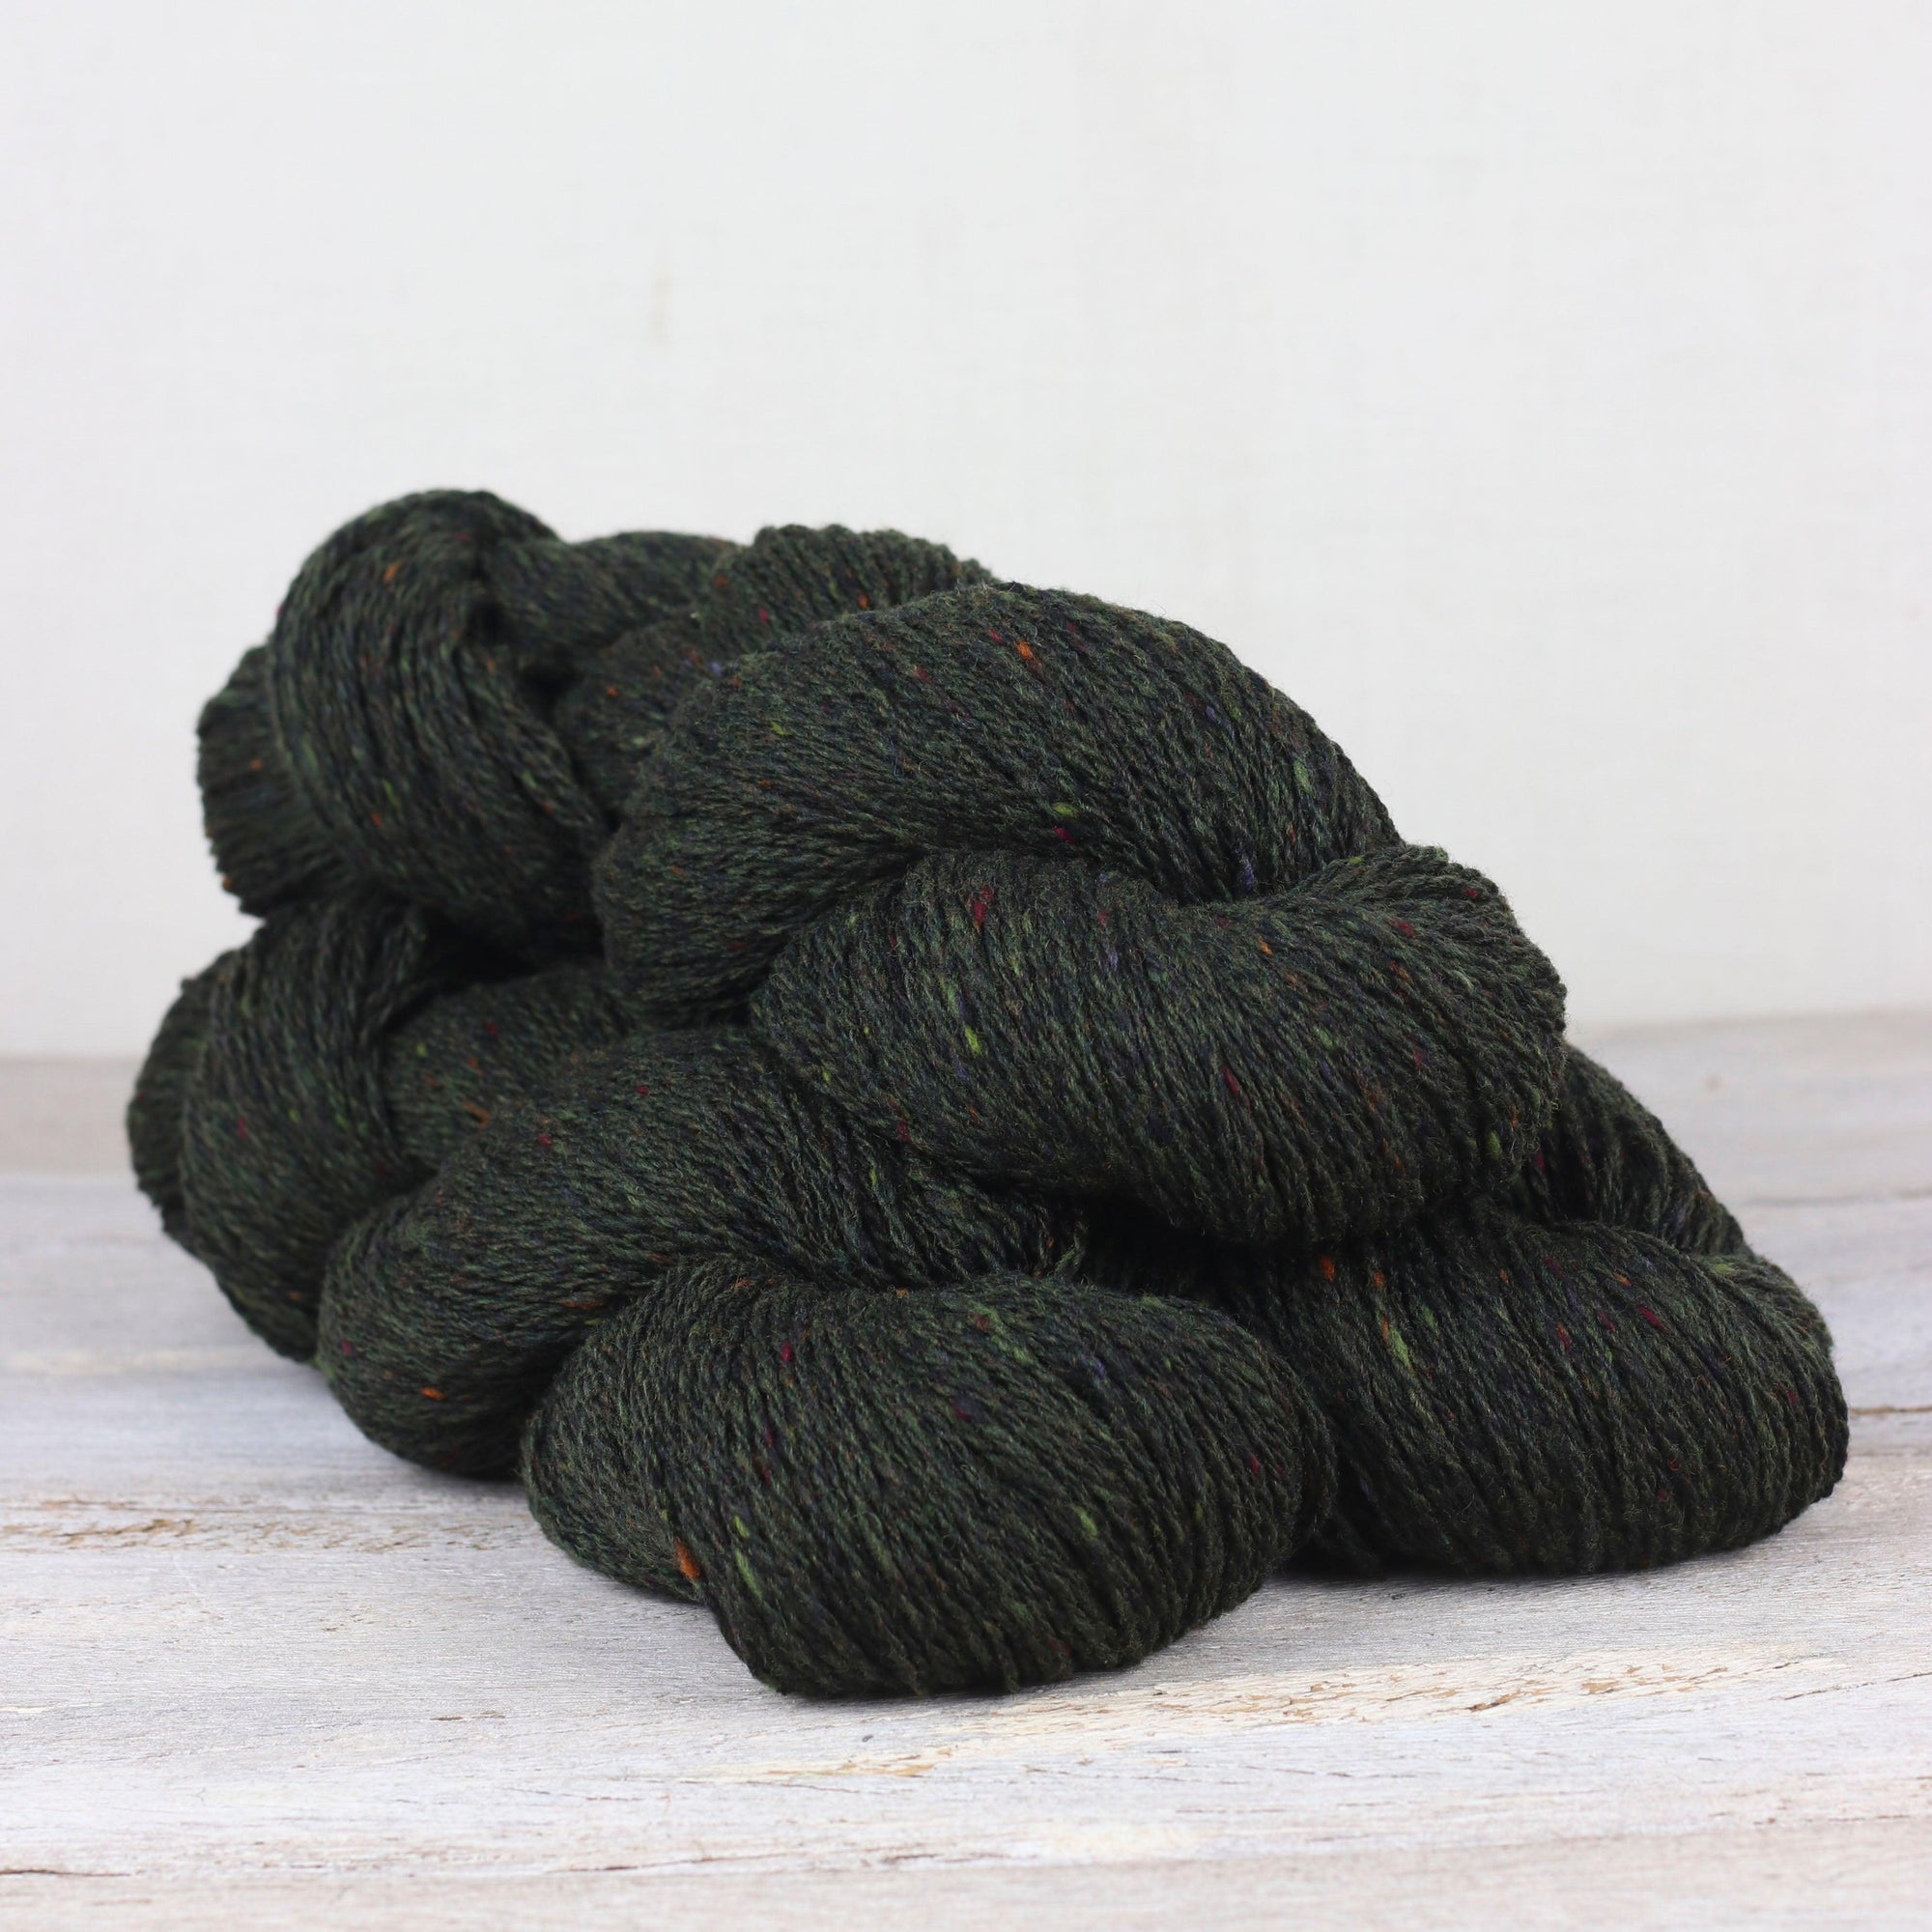 The Fibre Co. The Fibre Co. Arranmore Light - Derrycarne - DK Knitting Yarn